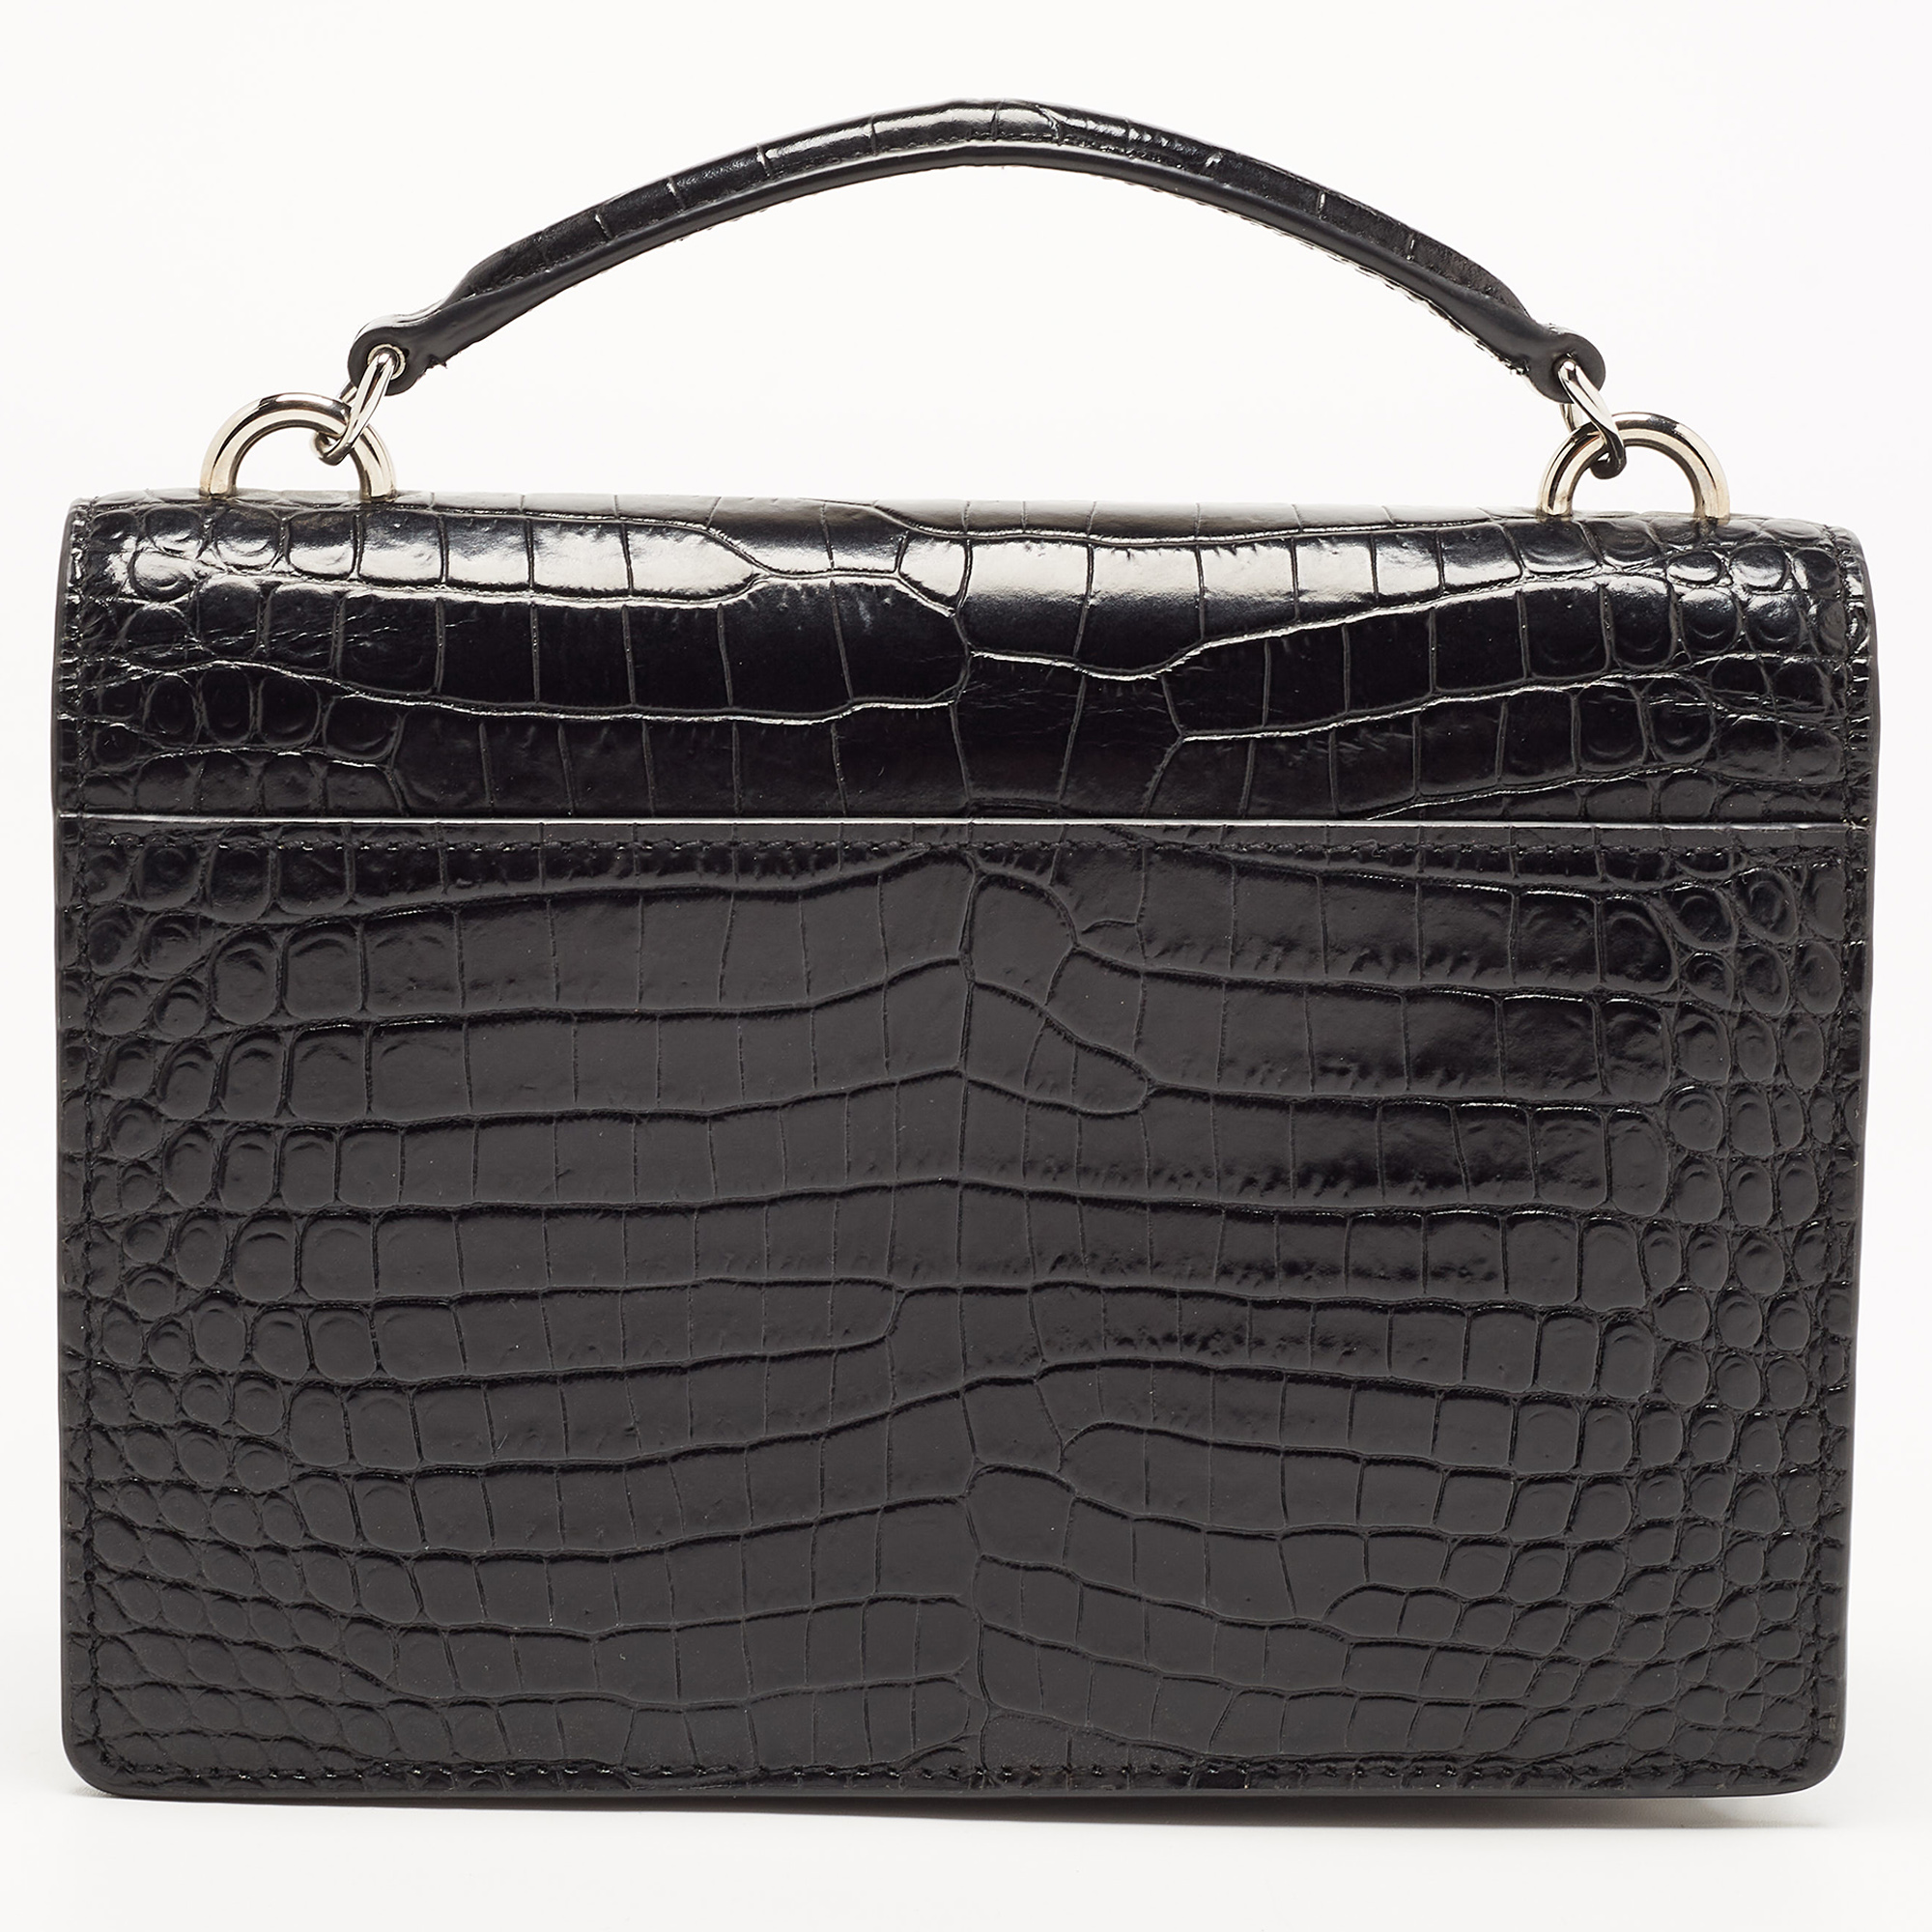 Saint Laurent Black Croc Embossed Leather Sunset Chain Wallet Bag